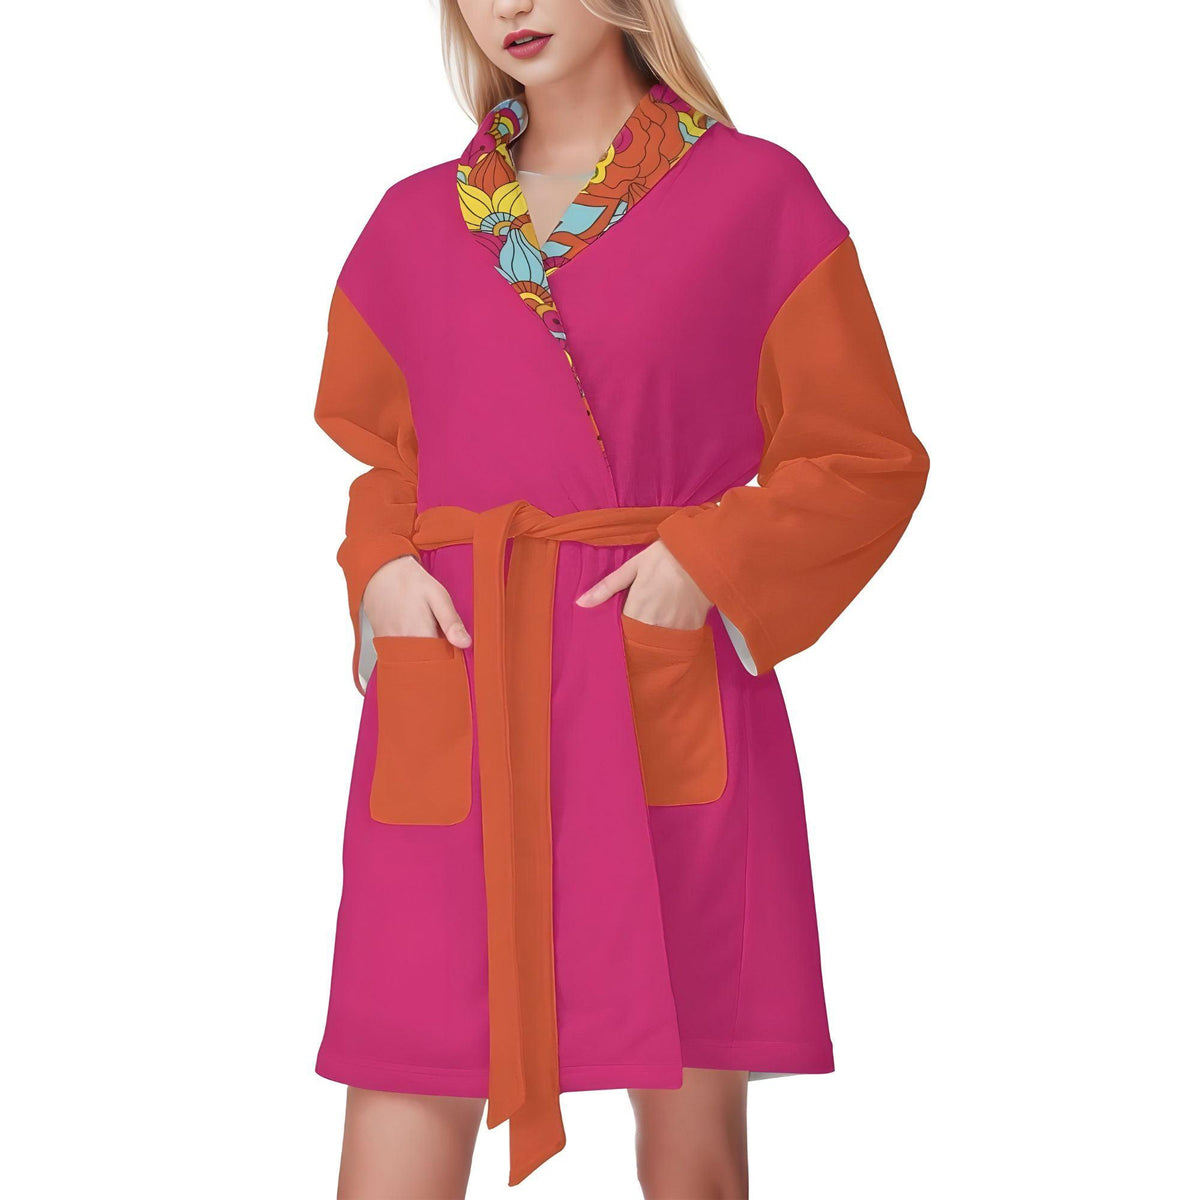 Inela Color Block Lightweight Short Pink & Orange Bathrobe Flower Power Retro Vibrant Robe Travel Pockets Self Tie Belted Women's